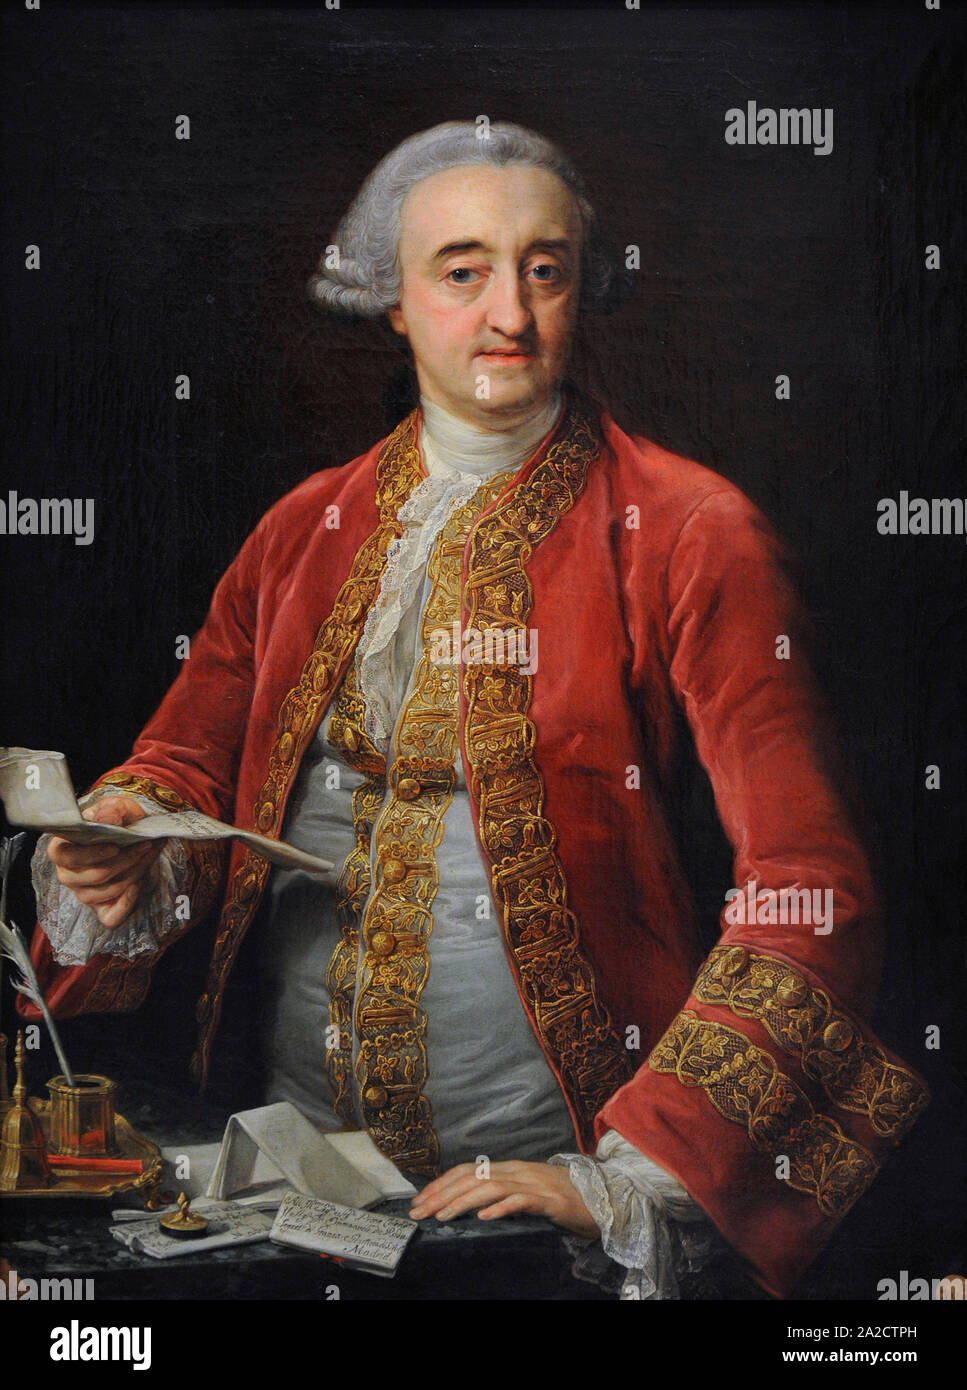 Manuel Roda y Arrieta (1706/1707-1782). Spanish politician. Founder of the History Academy. Portrait by Pompeo Batoni (1708-1787), 1765. San Fernando Royal Academy of Fine Arts. Madrid. Spain. Stock Photo